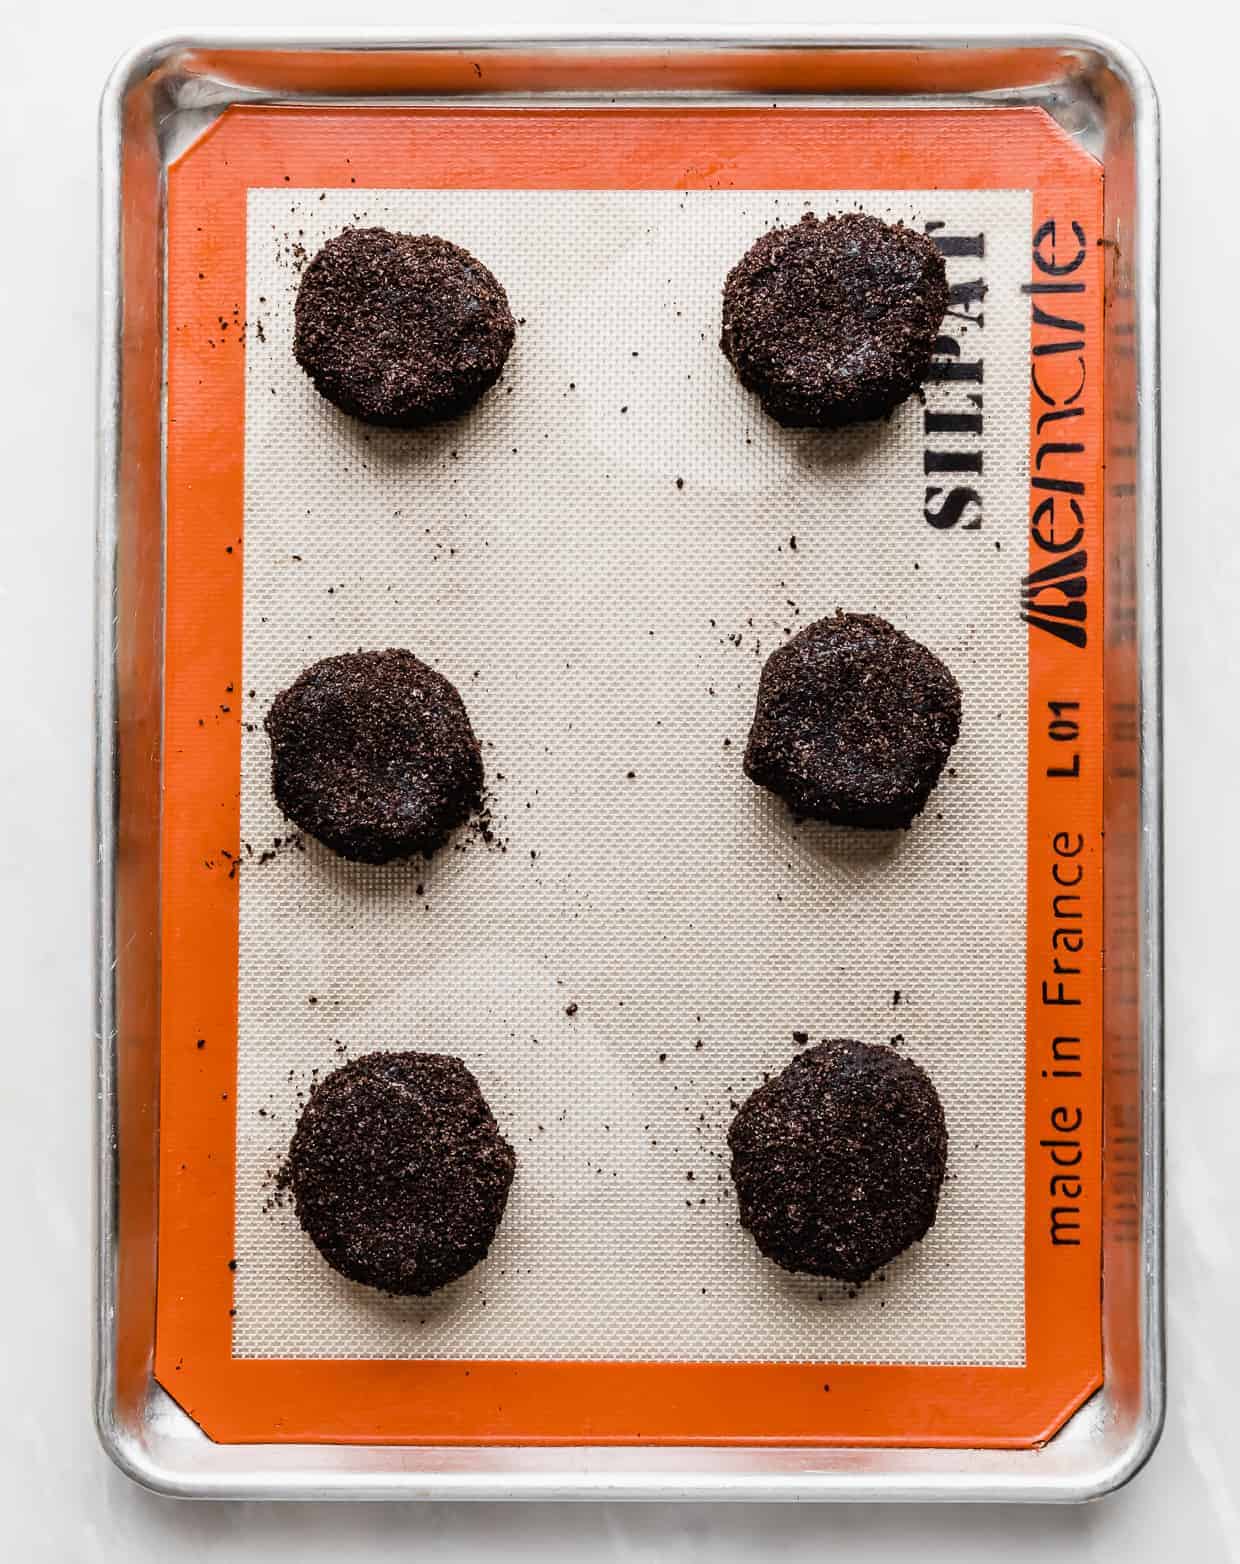 Six Crumbl Chocolate Oreo Cookie dough balls on a baking sheet.